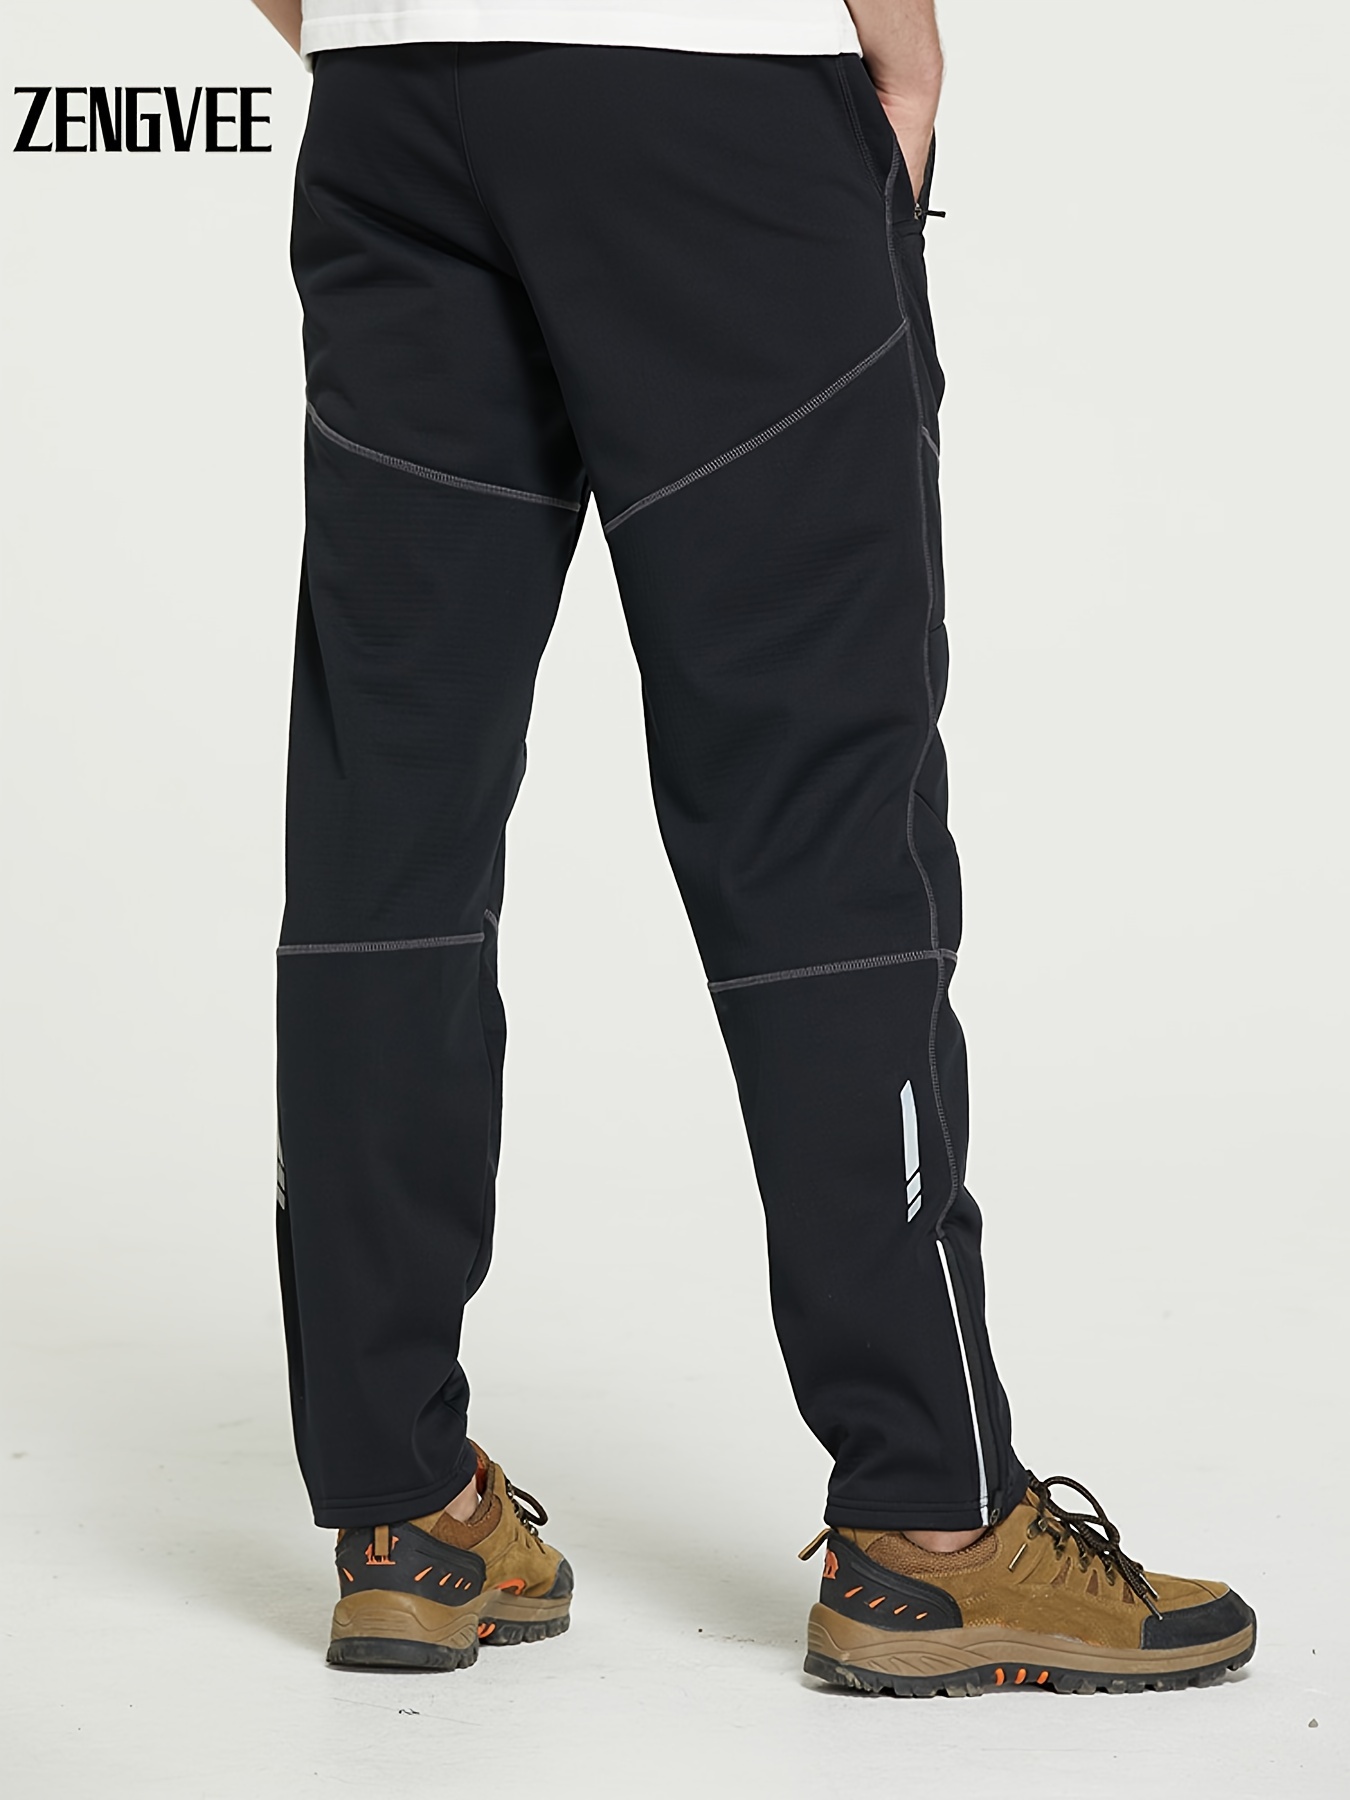 BALEAF Men's Winter Bike Running Pants Windproof Snow Ski Fleece Thermal  Pants Cycling Hiking Sport Pants Black Size S : : Clothing, Shoes  & Accessories